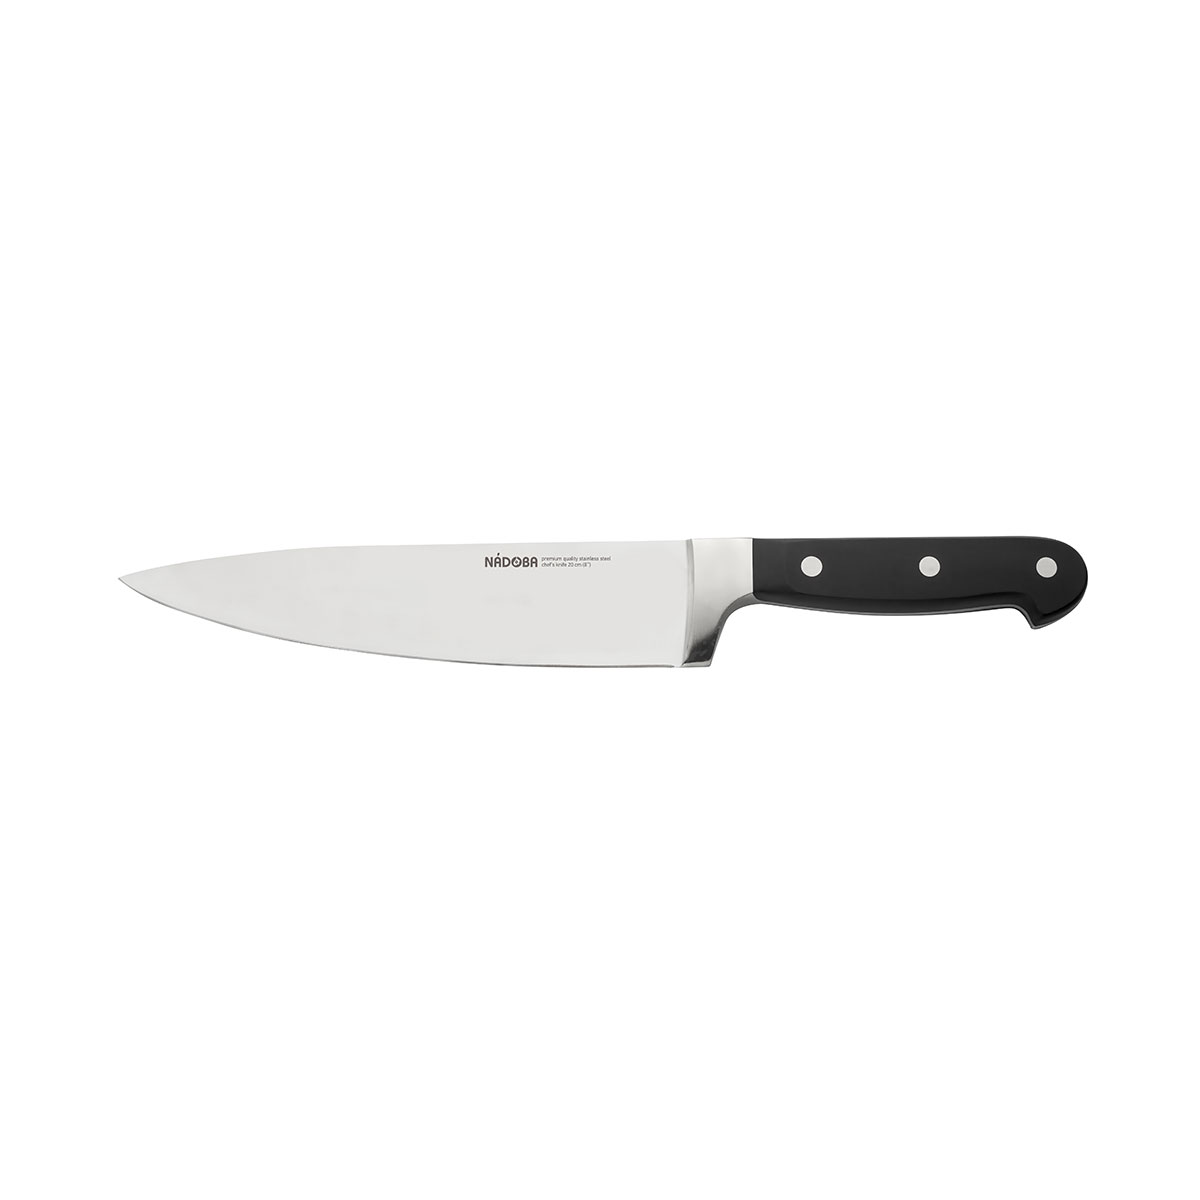 Нож Nadoba поварской 724213, 20 см нож кухонный 200 поварской mal 02р malloni 36 985373